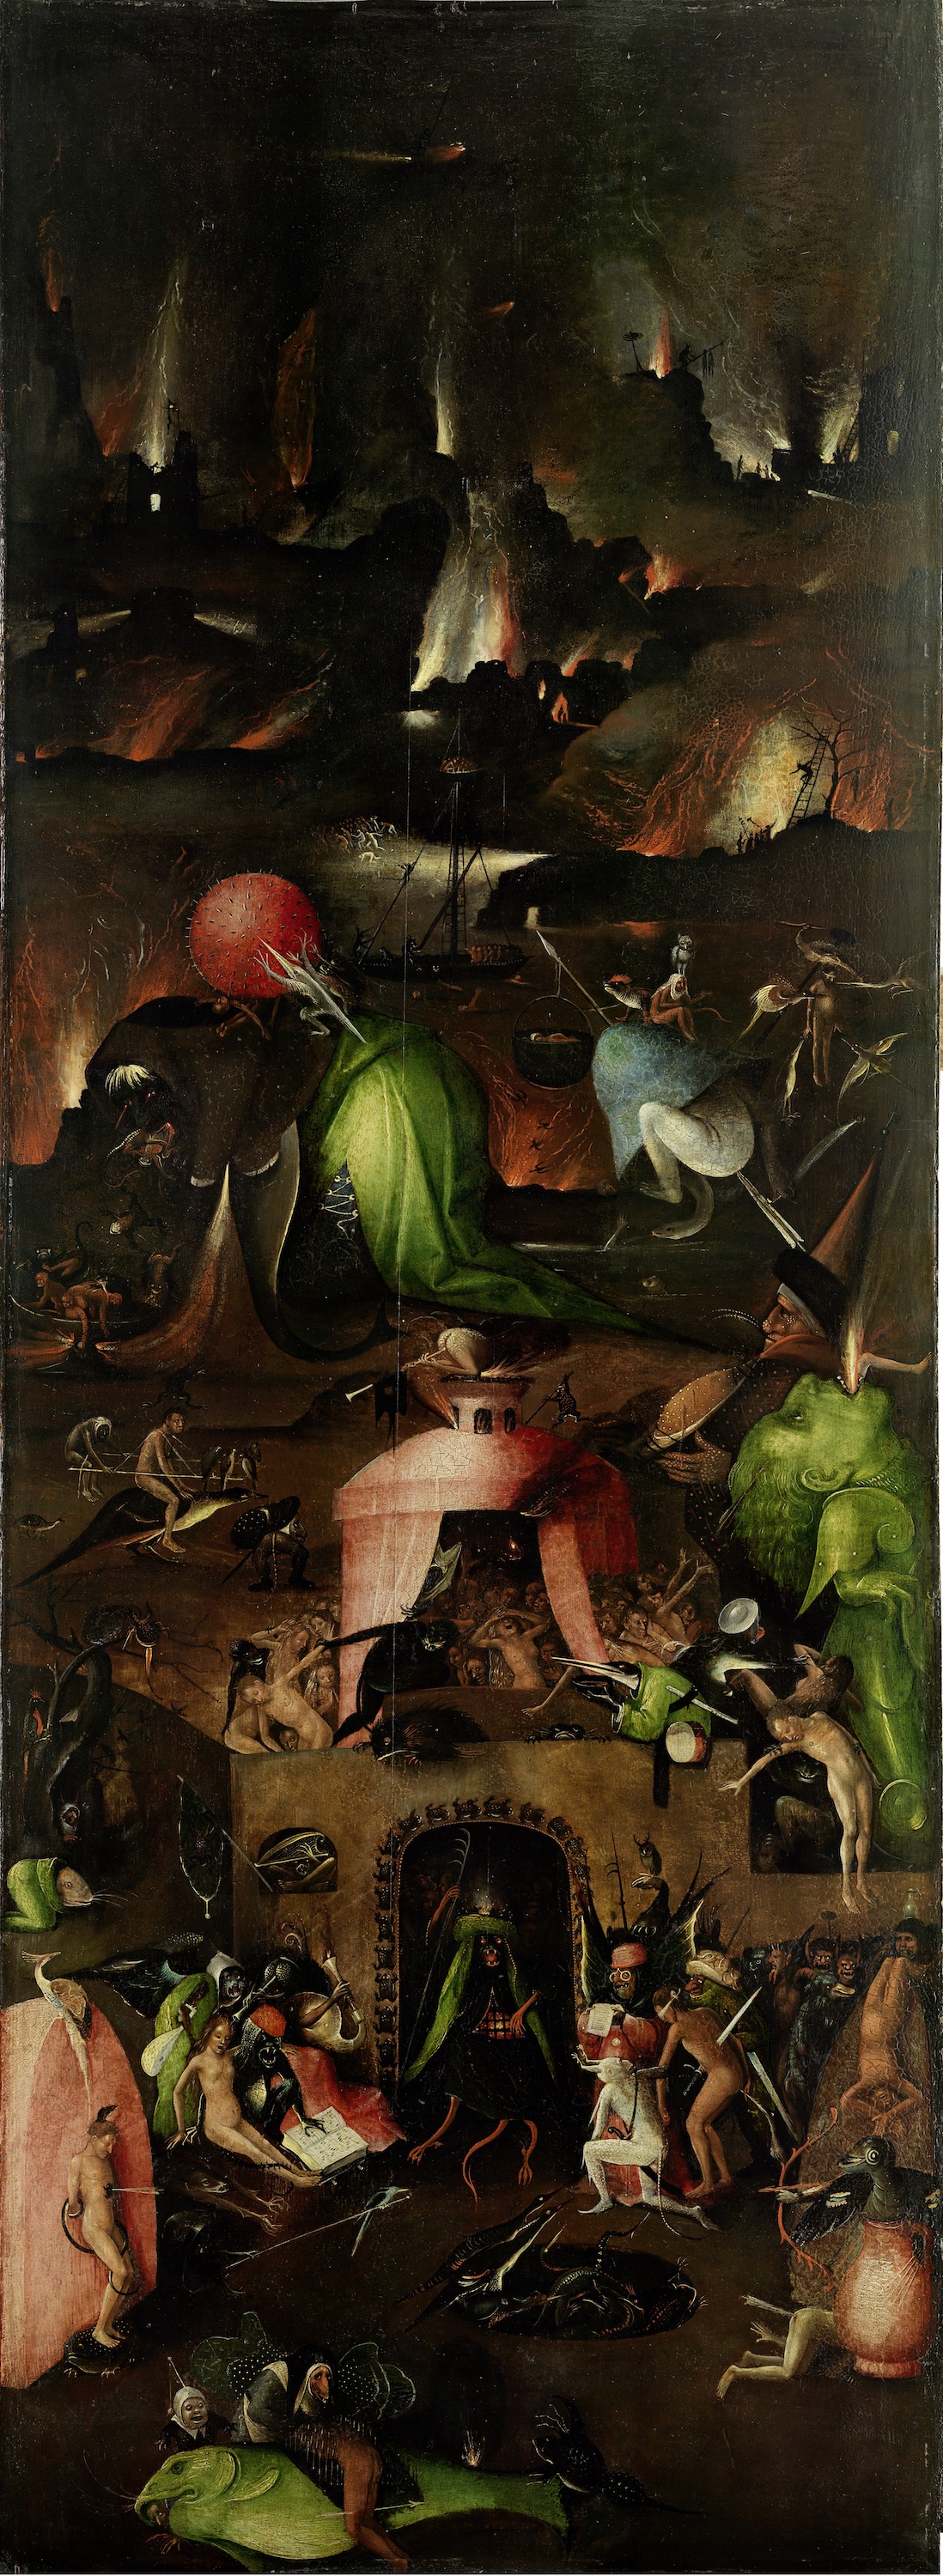 अंतिम निर्णय के तीन चौखट - दाहिना चौखट by Hieronymus Bosch - c. 1500 